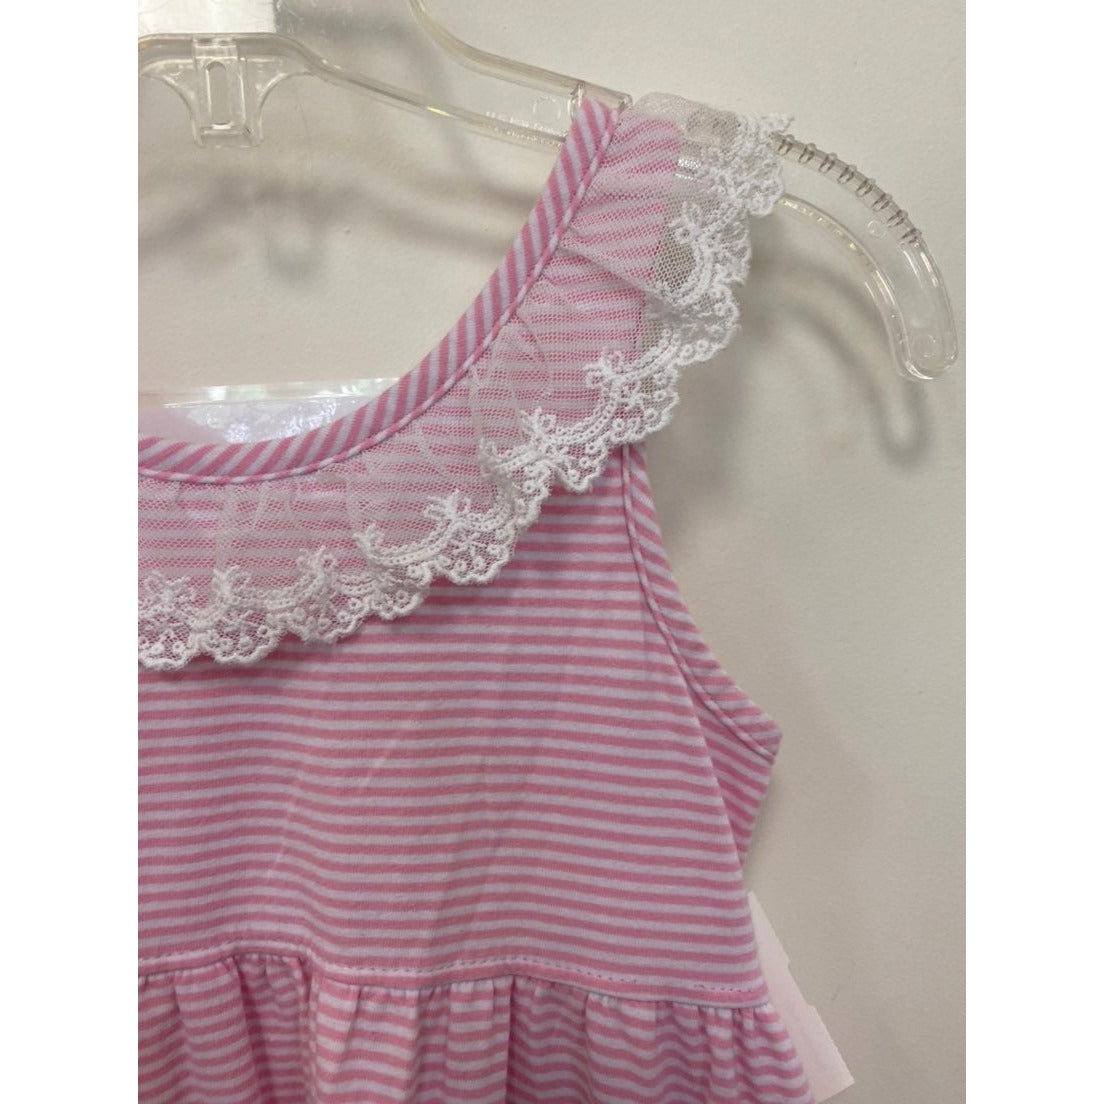 Size 8 pink striped girls boutique dress